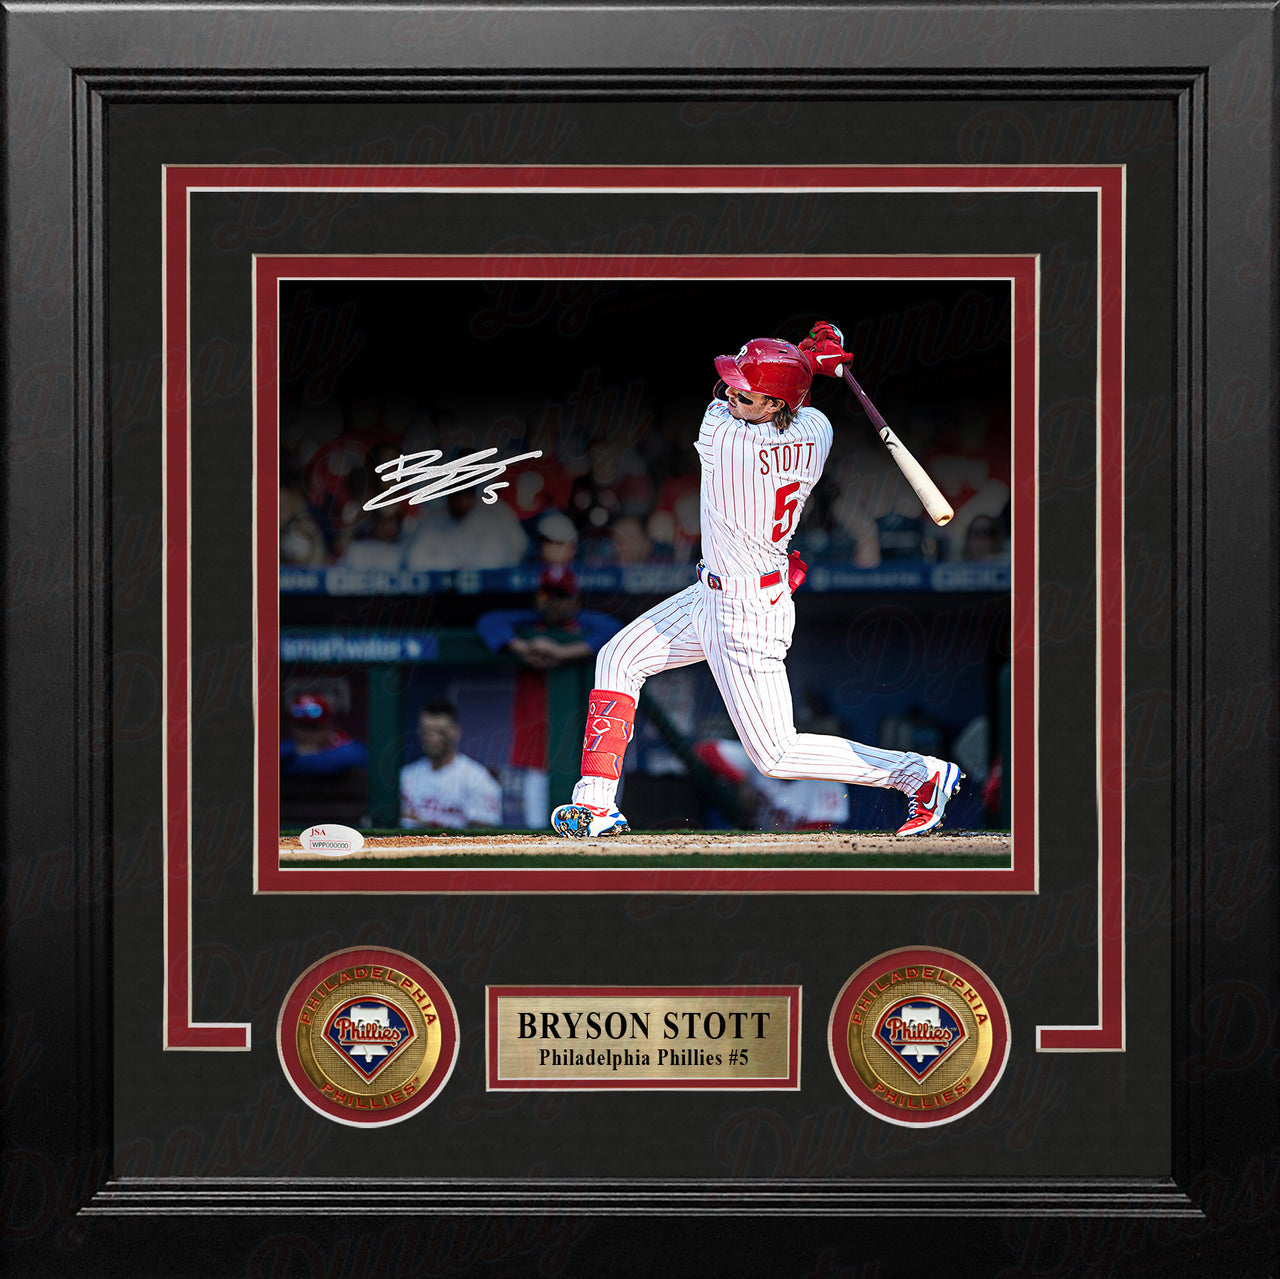 Bryson Stott Philadelphia Phillies Autographed Framed First MLB Hit Blackout Baseball Photo - Dynasty Sports & Framing 